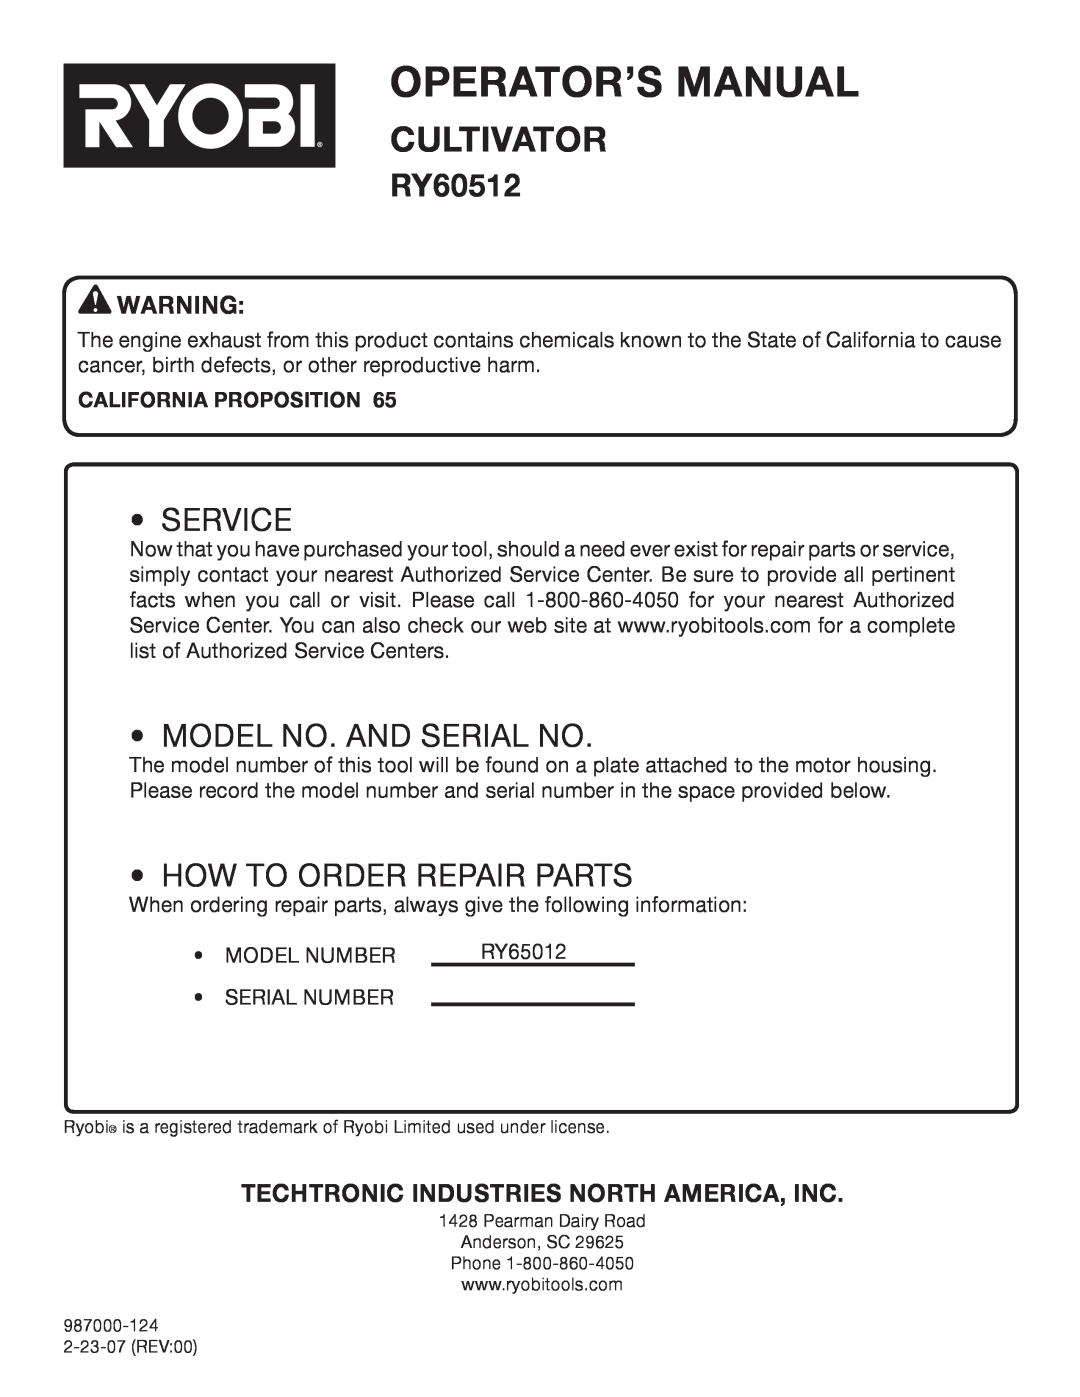 Ryobi RY60512 Techtronic Industries North America, Inc, California Proposition, Operator’S Manual, Cultivator, Service 